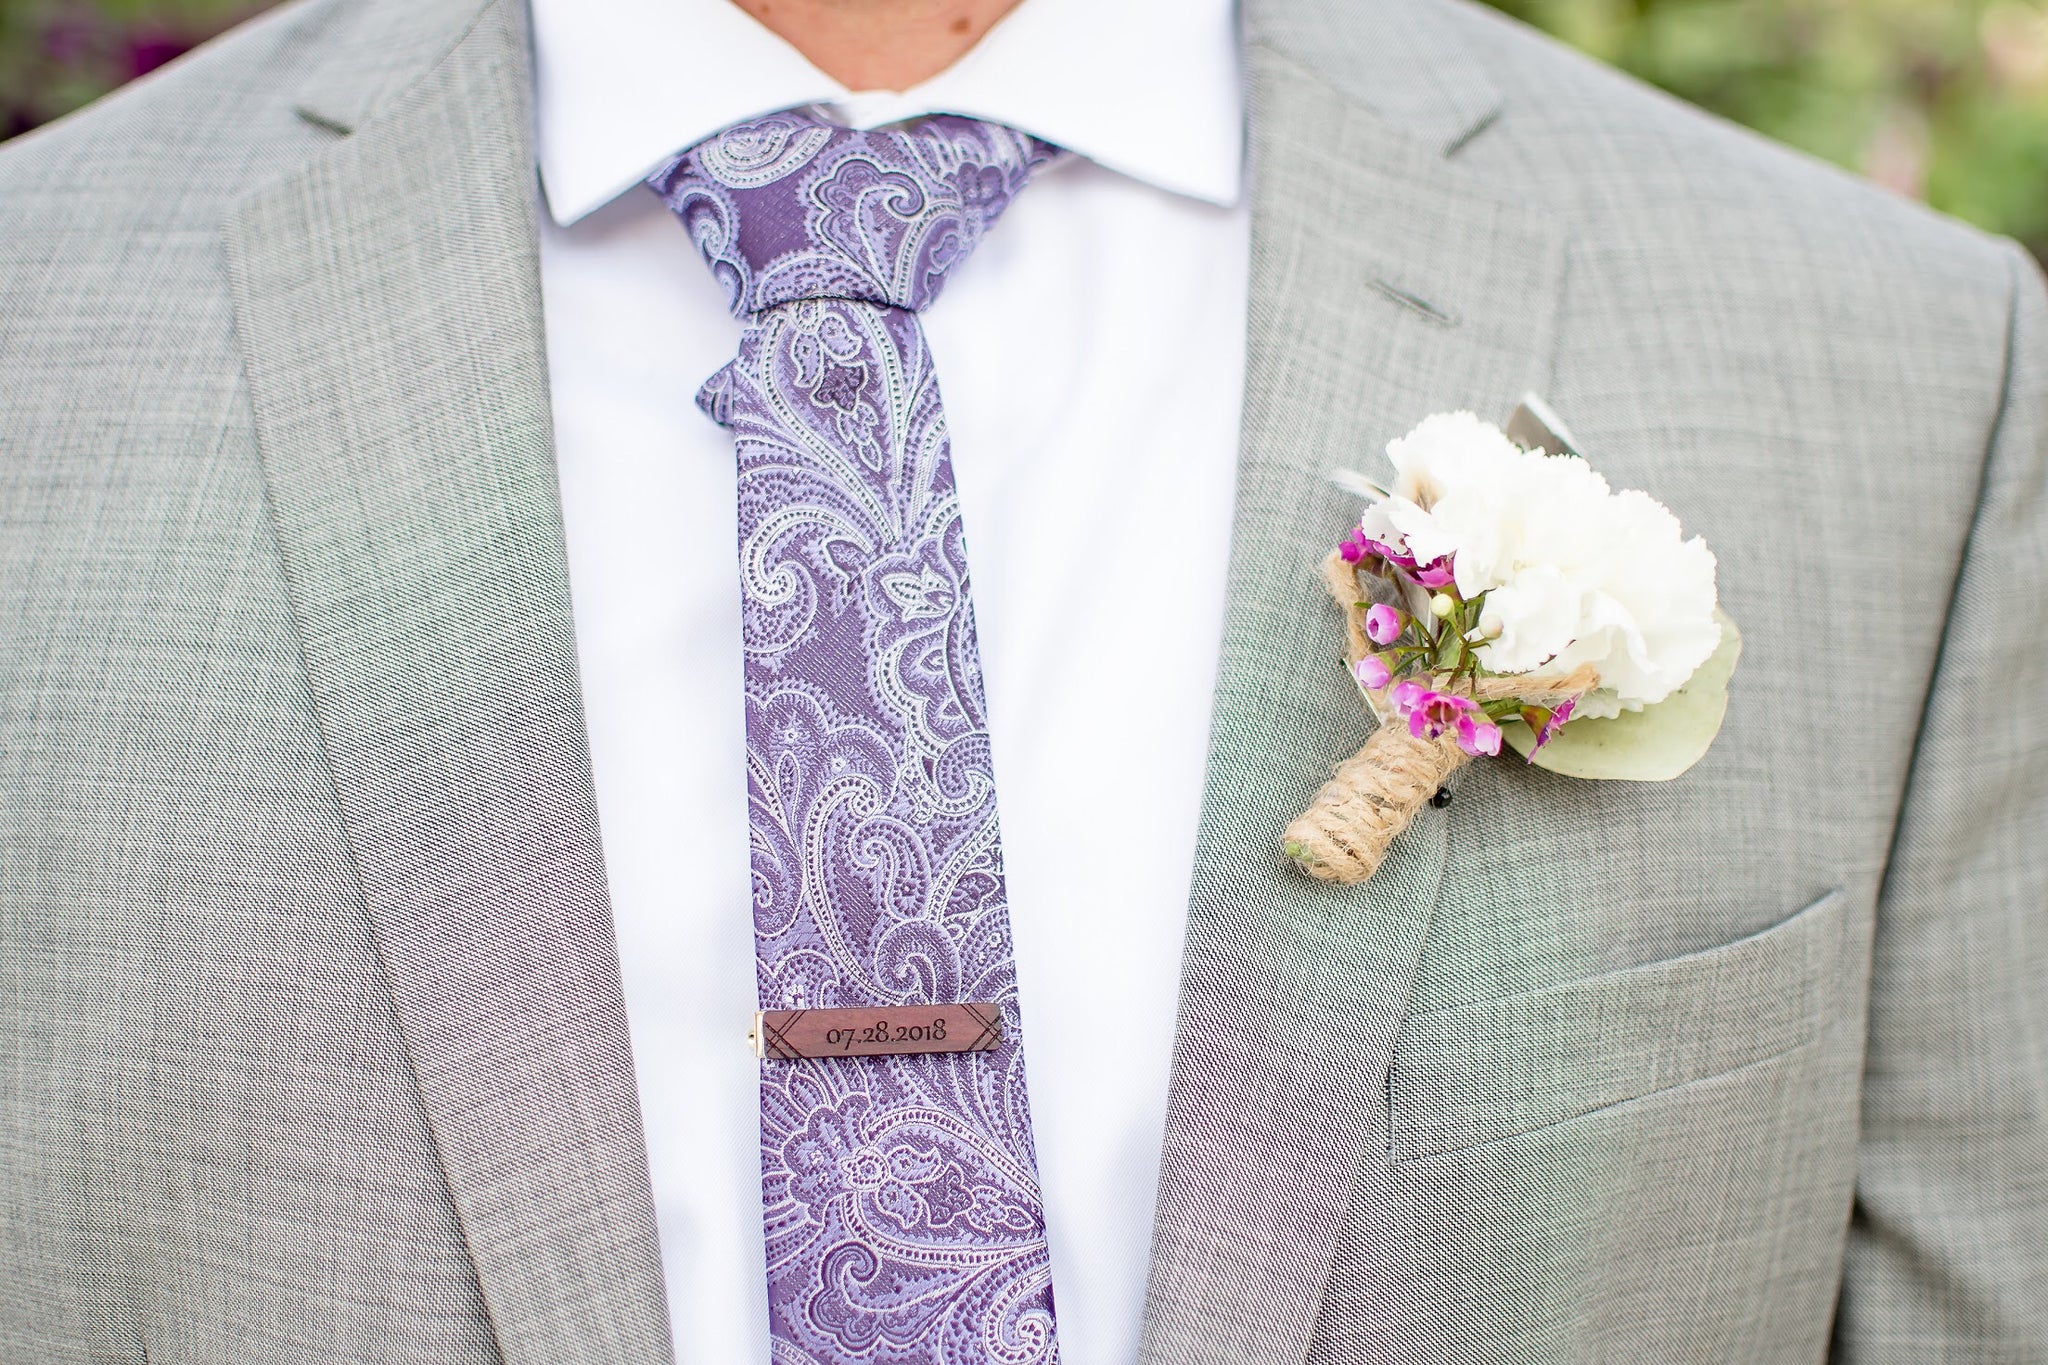 Wooden Tie Clip, Wood Tie Bar, Mens Wedding Accessories, Tie Clip Wood, Personalised Wooden Tie Clip, Minimalist Tie Clip, Gift for Him